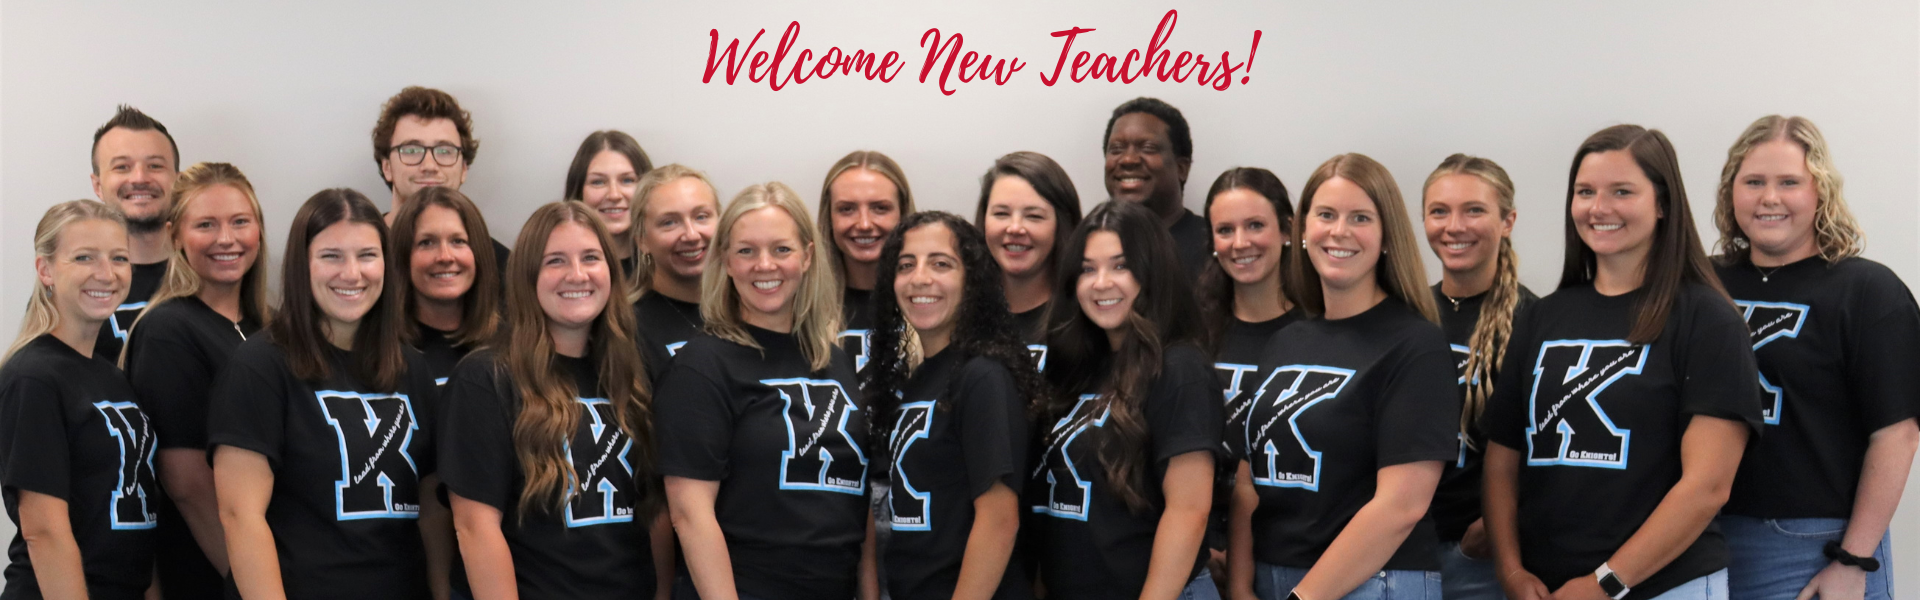 welcome new teachers